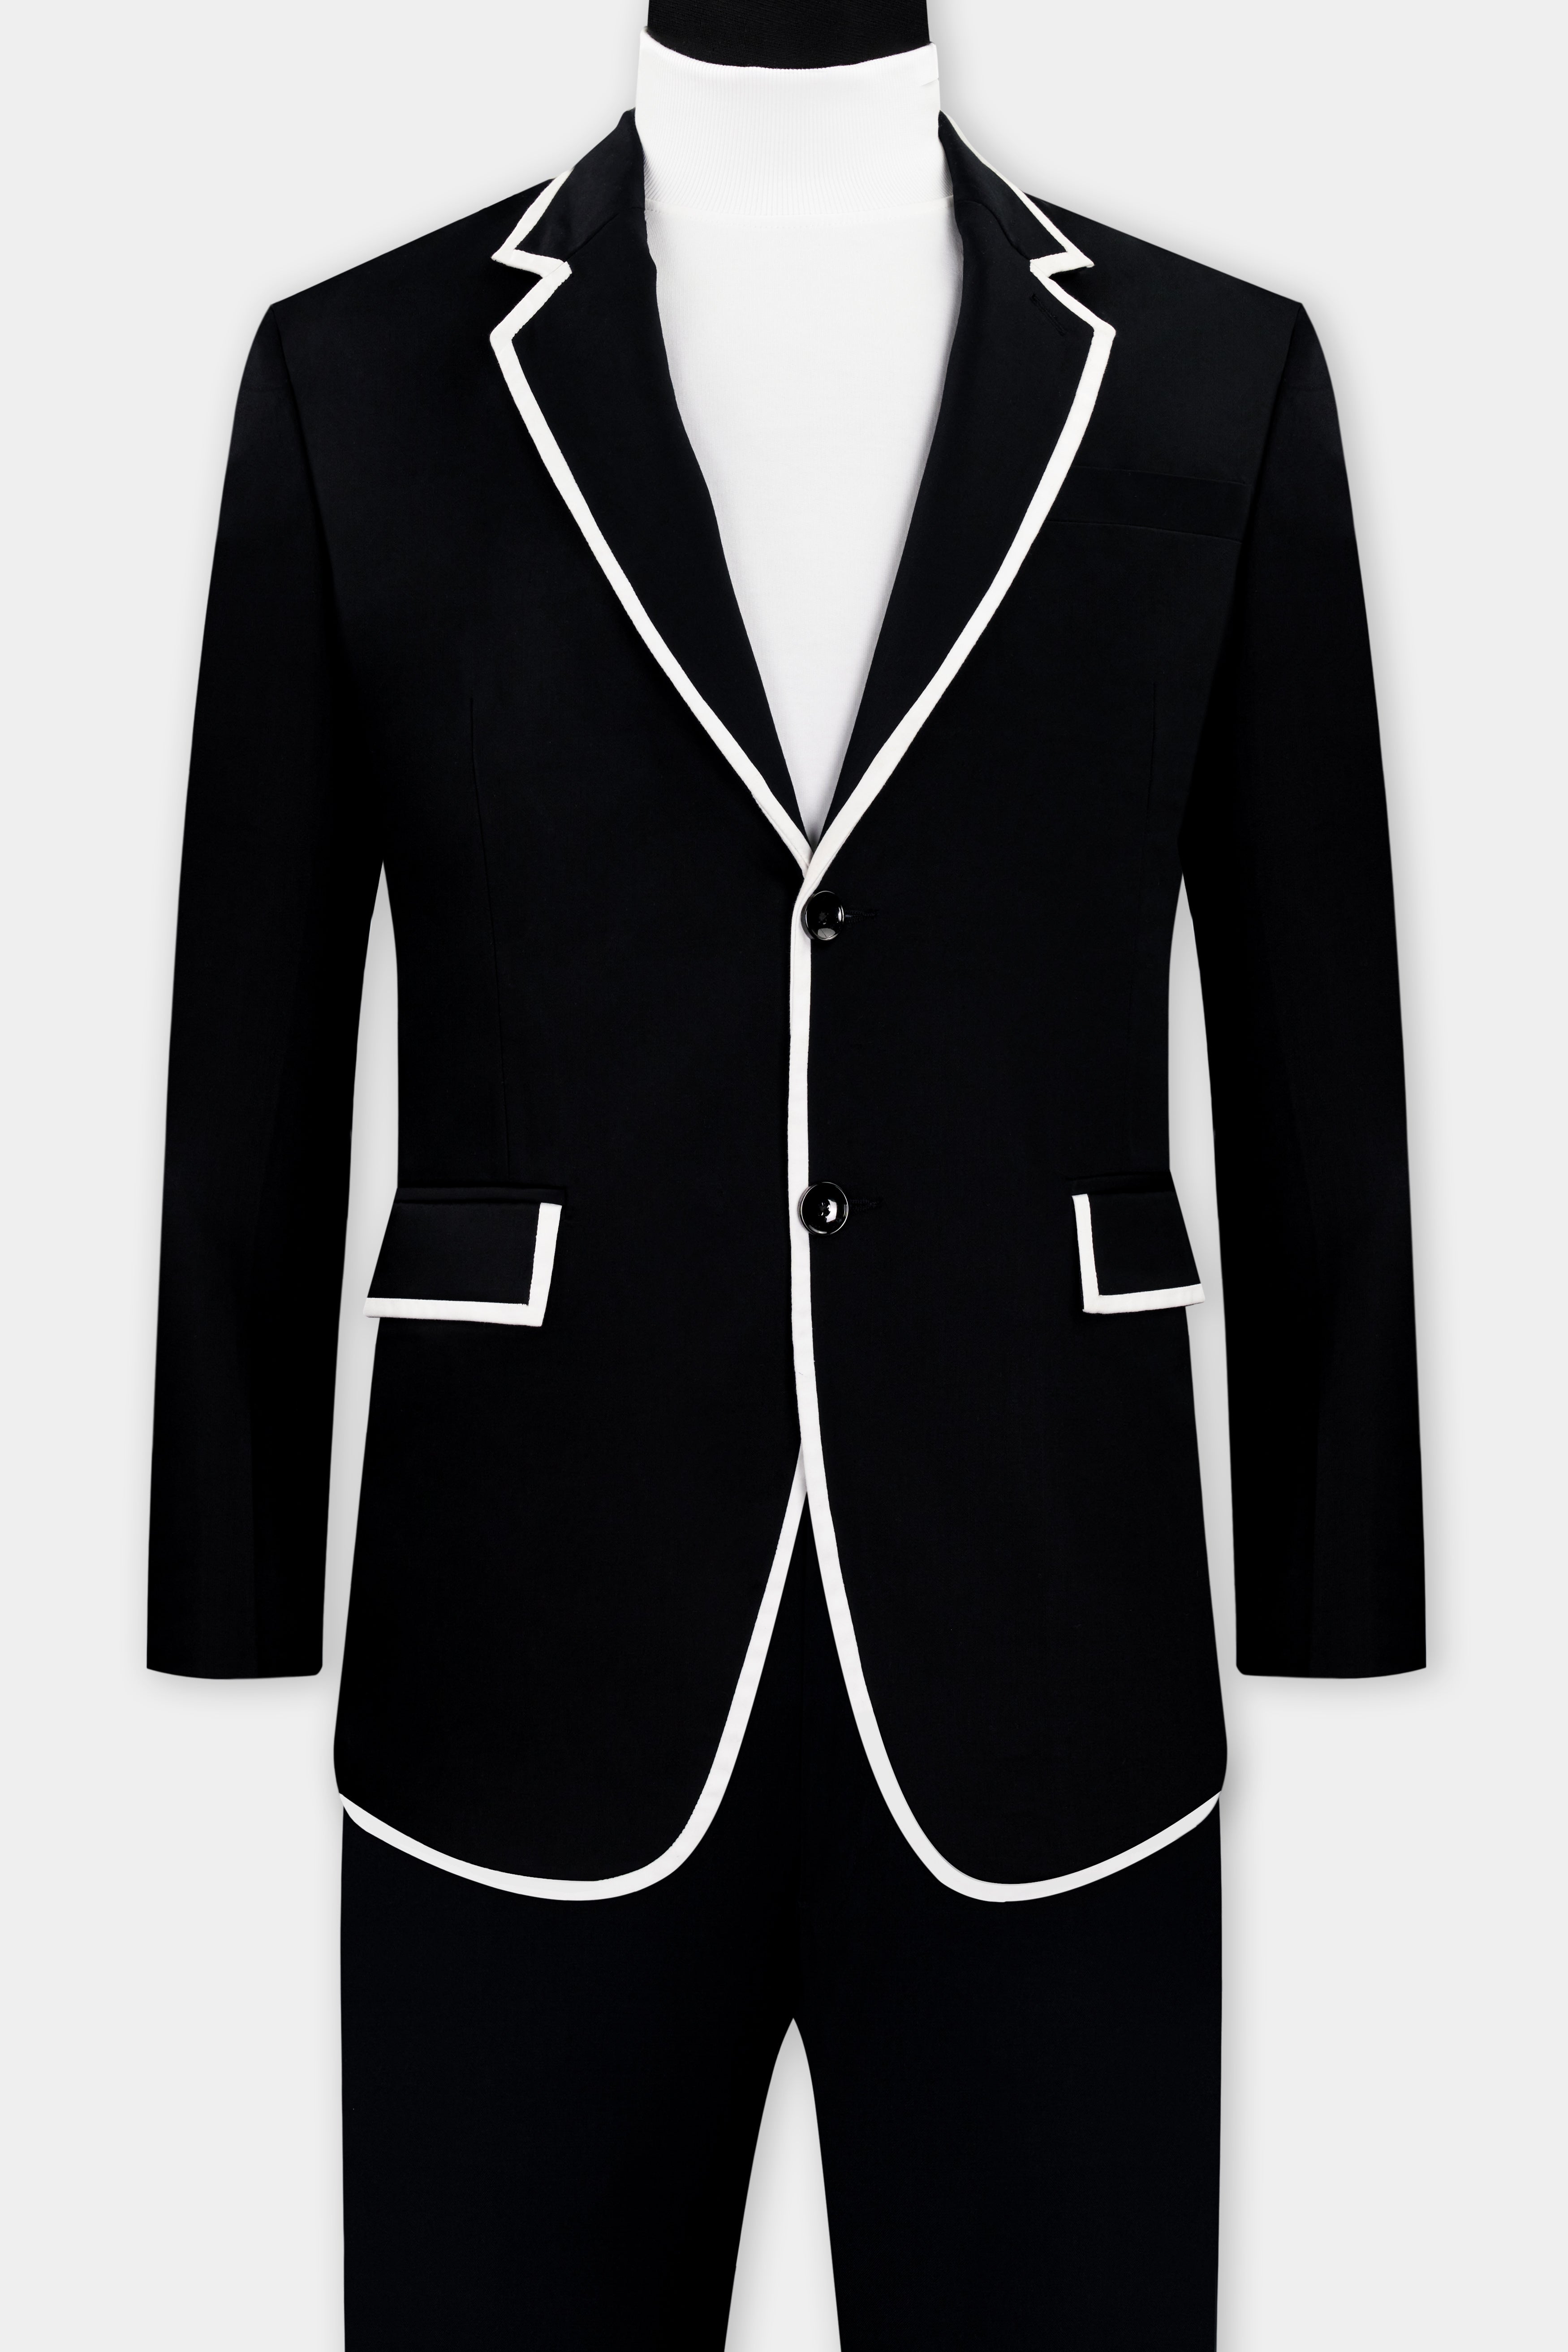 Jade Black Subtle Sheen with White Border Patterned Suit